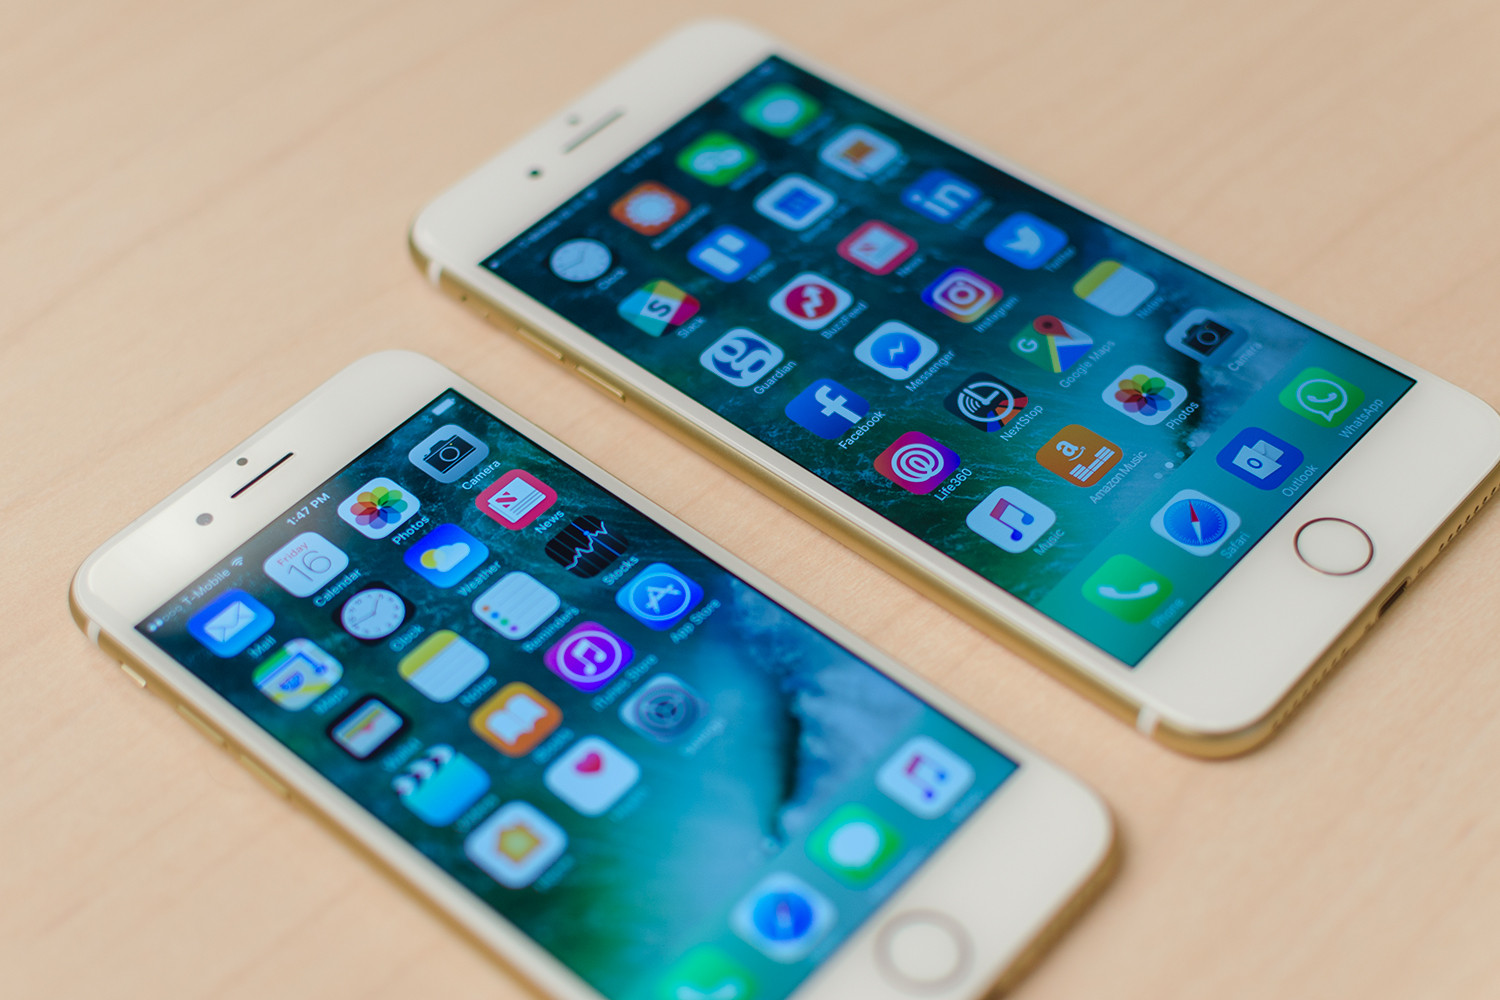 Nairamade Apple Iphone 7 Full Features Specs And Price In Nigeria